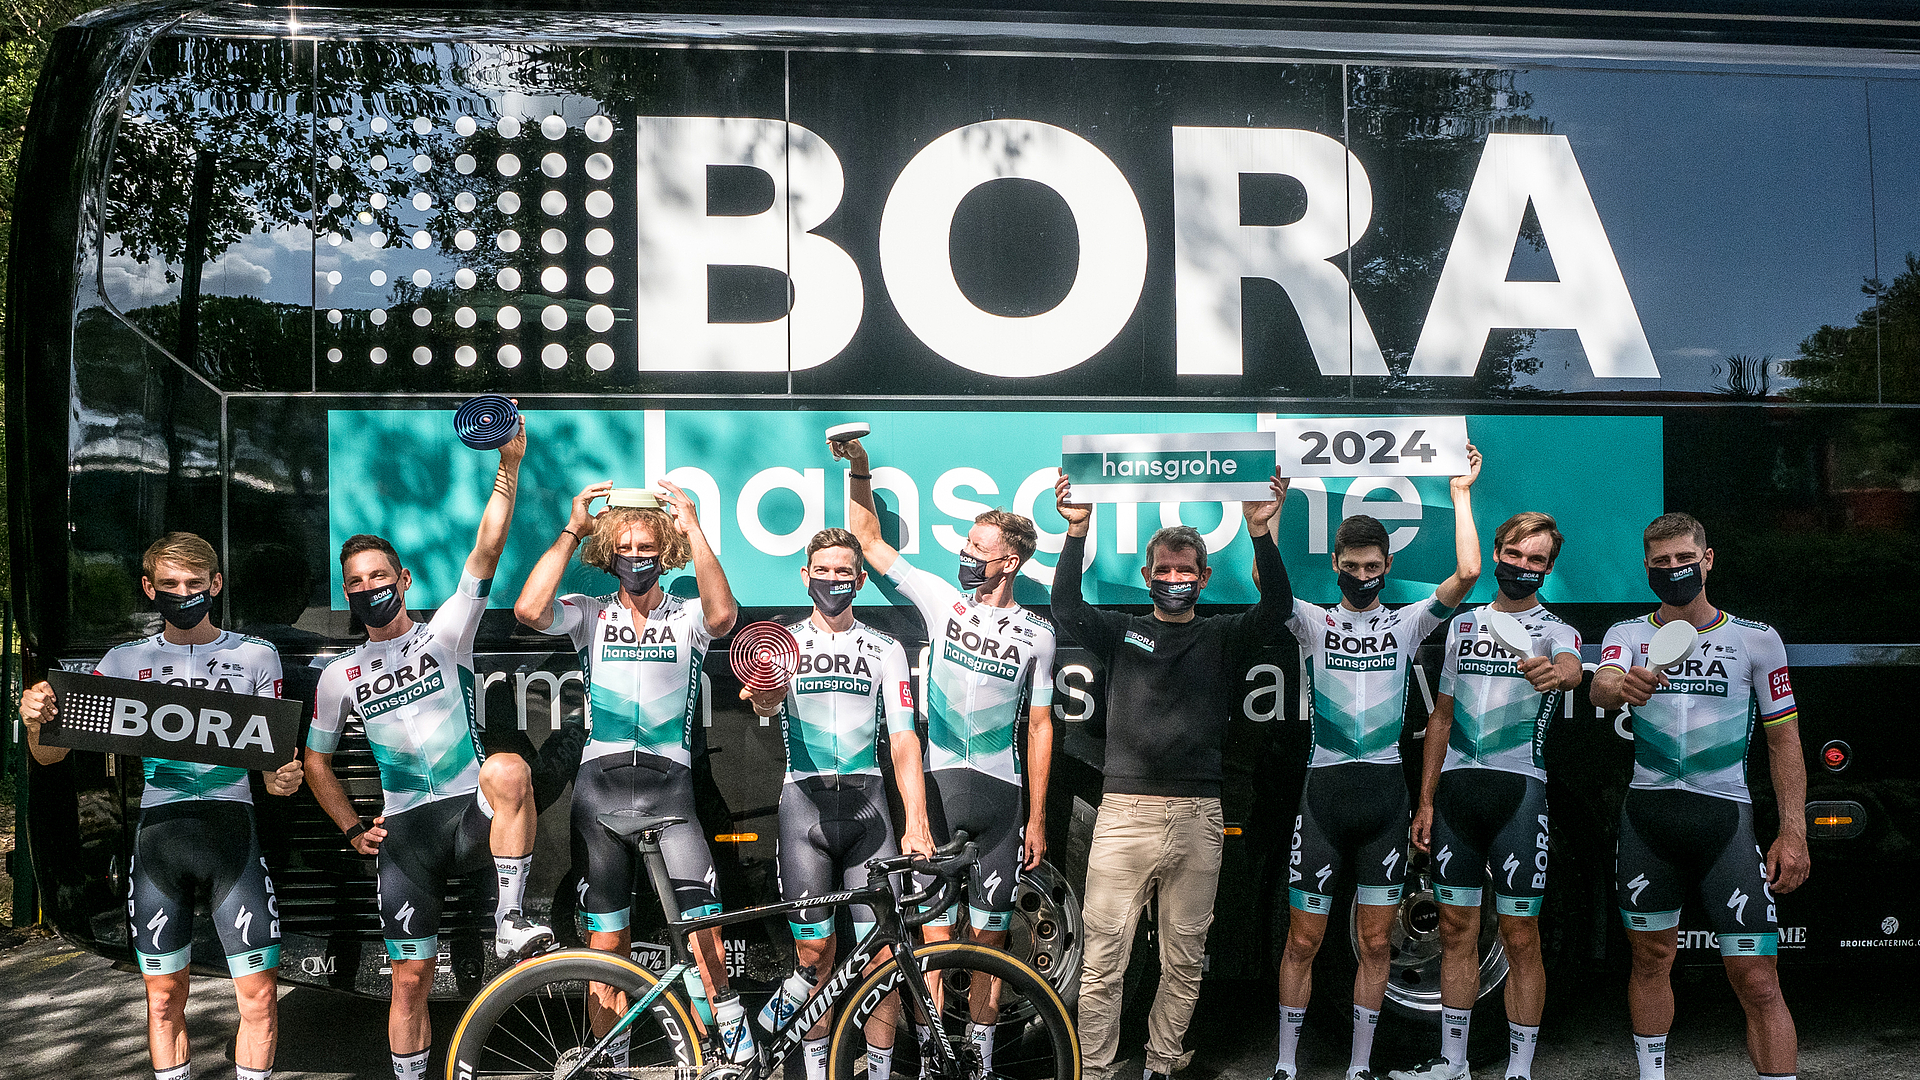 BORA prolonge son contrat de sponsor principal de l’équipe BORA – hansgrohe jusqu’en 2024